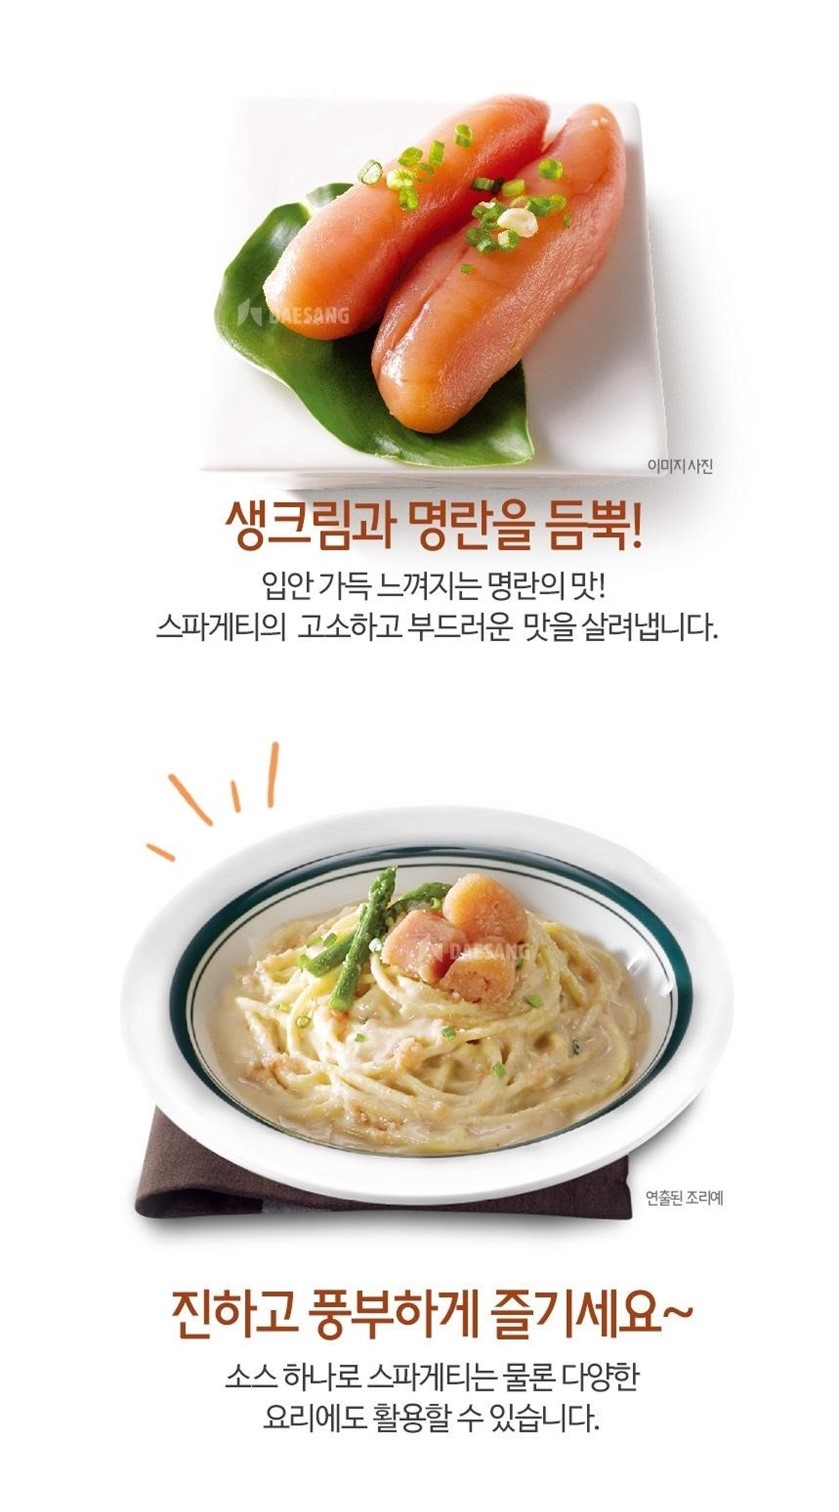 韓國食品-[CJO] Pollack Roe Cream Spaghetti Sauce 350g